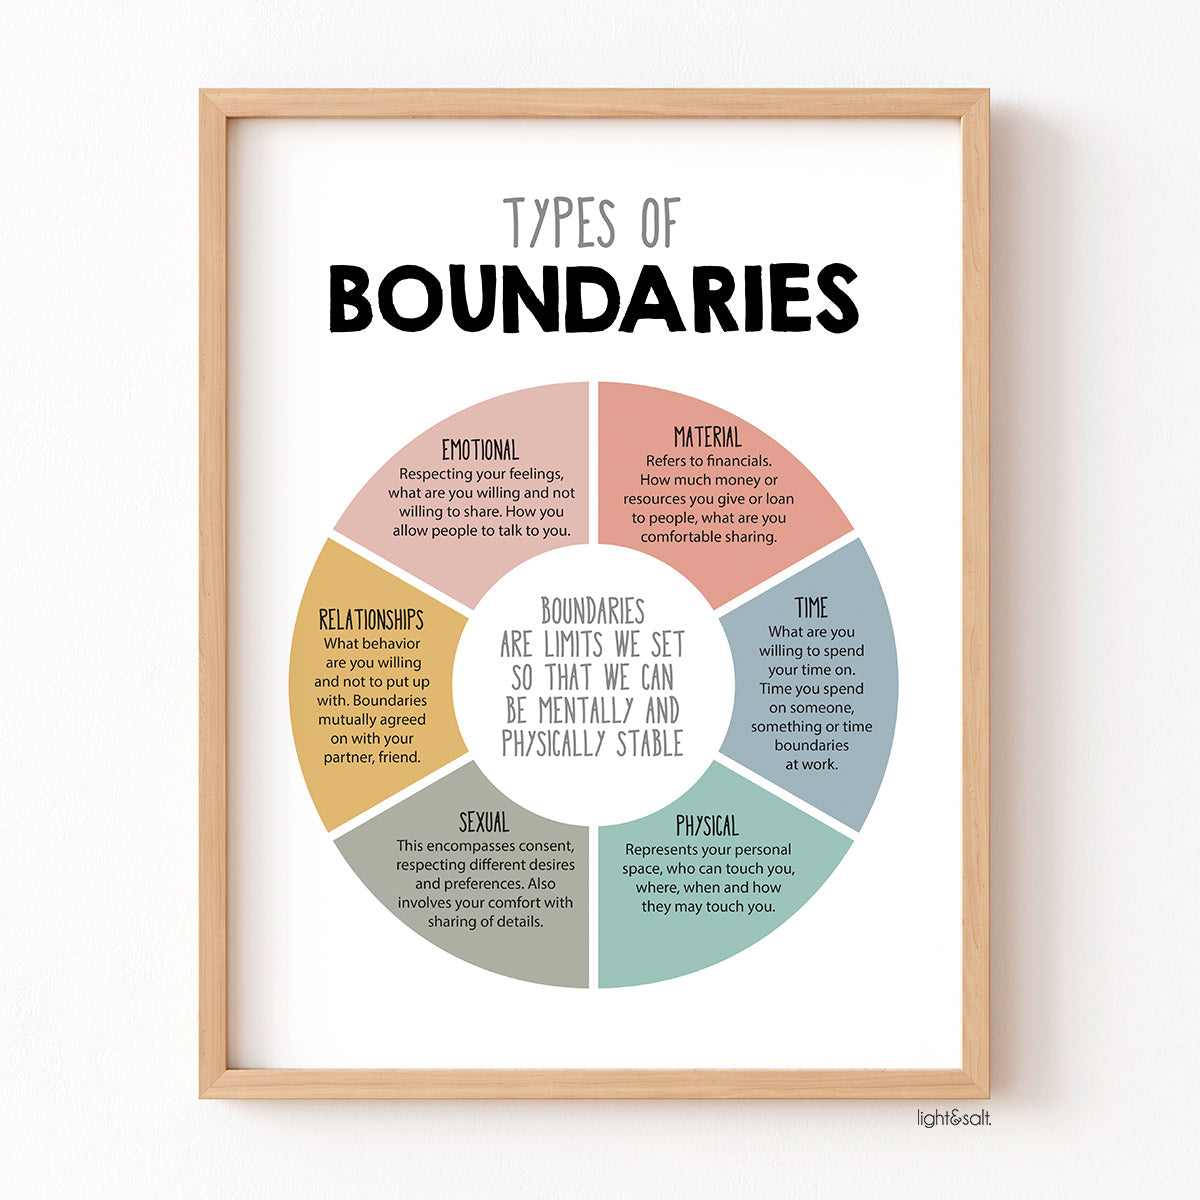 Types of boundaries poster